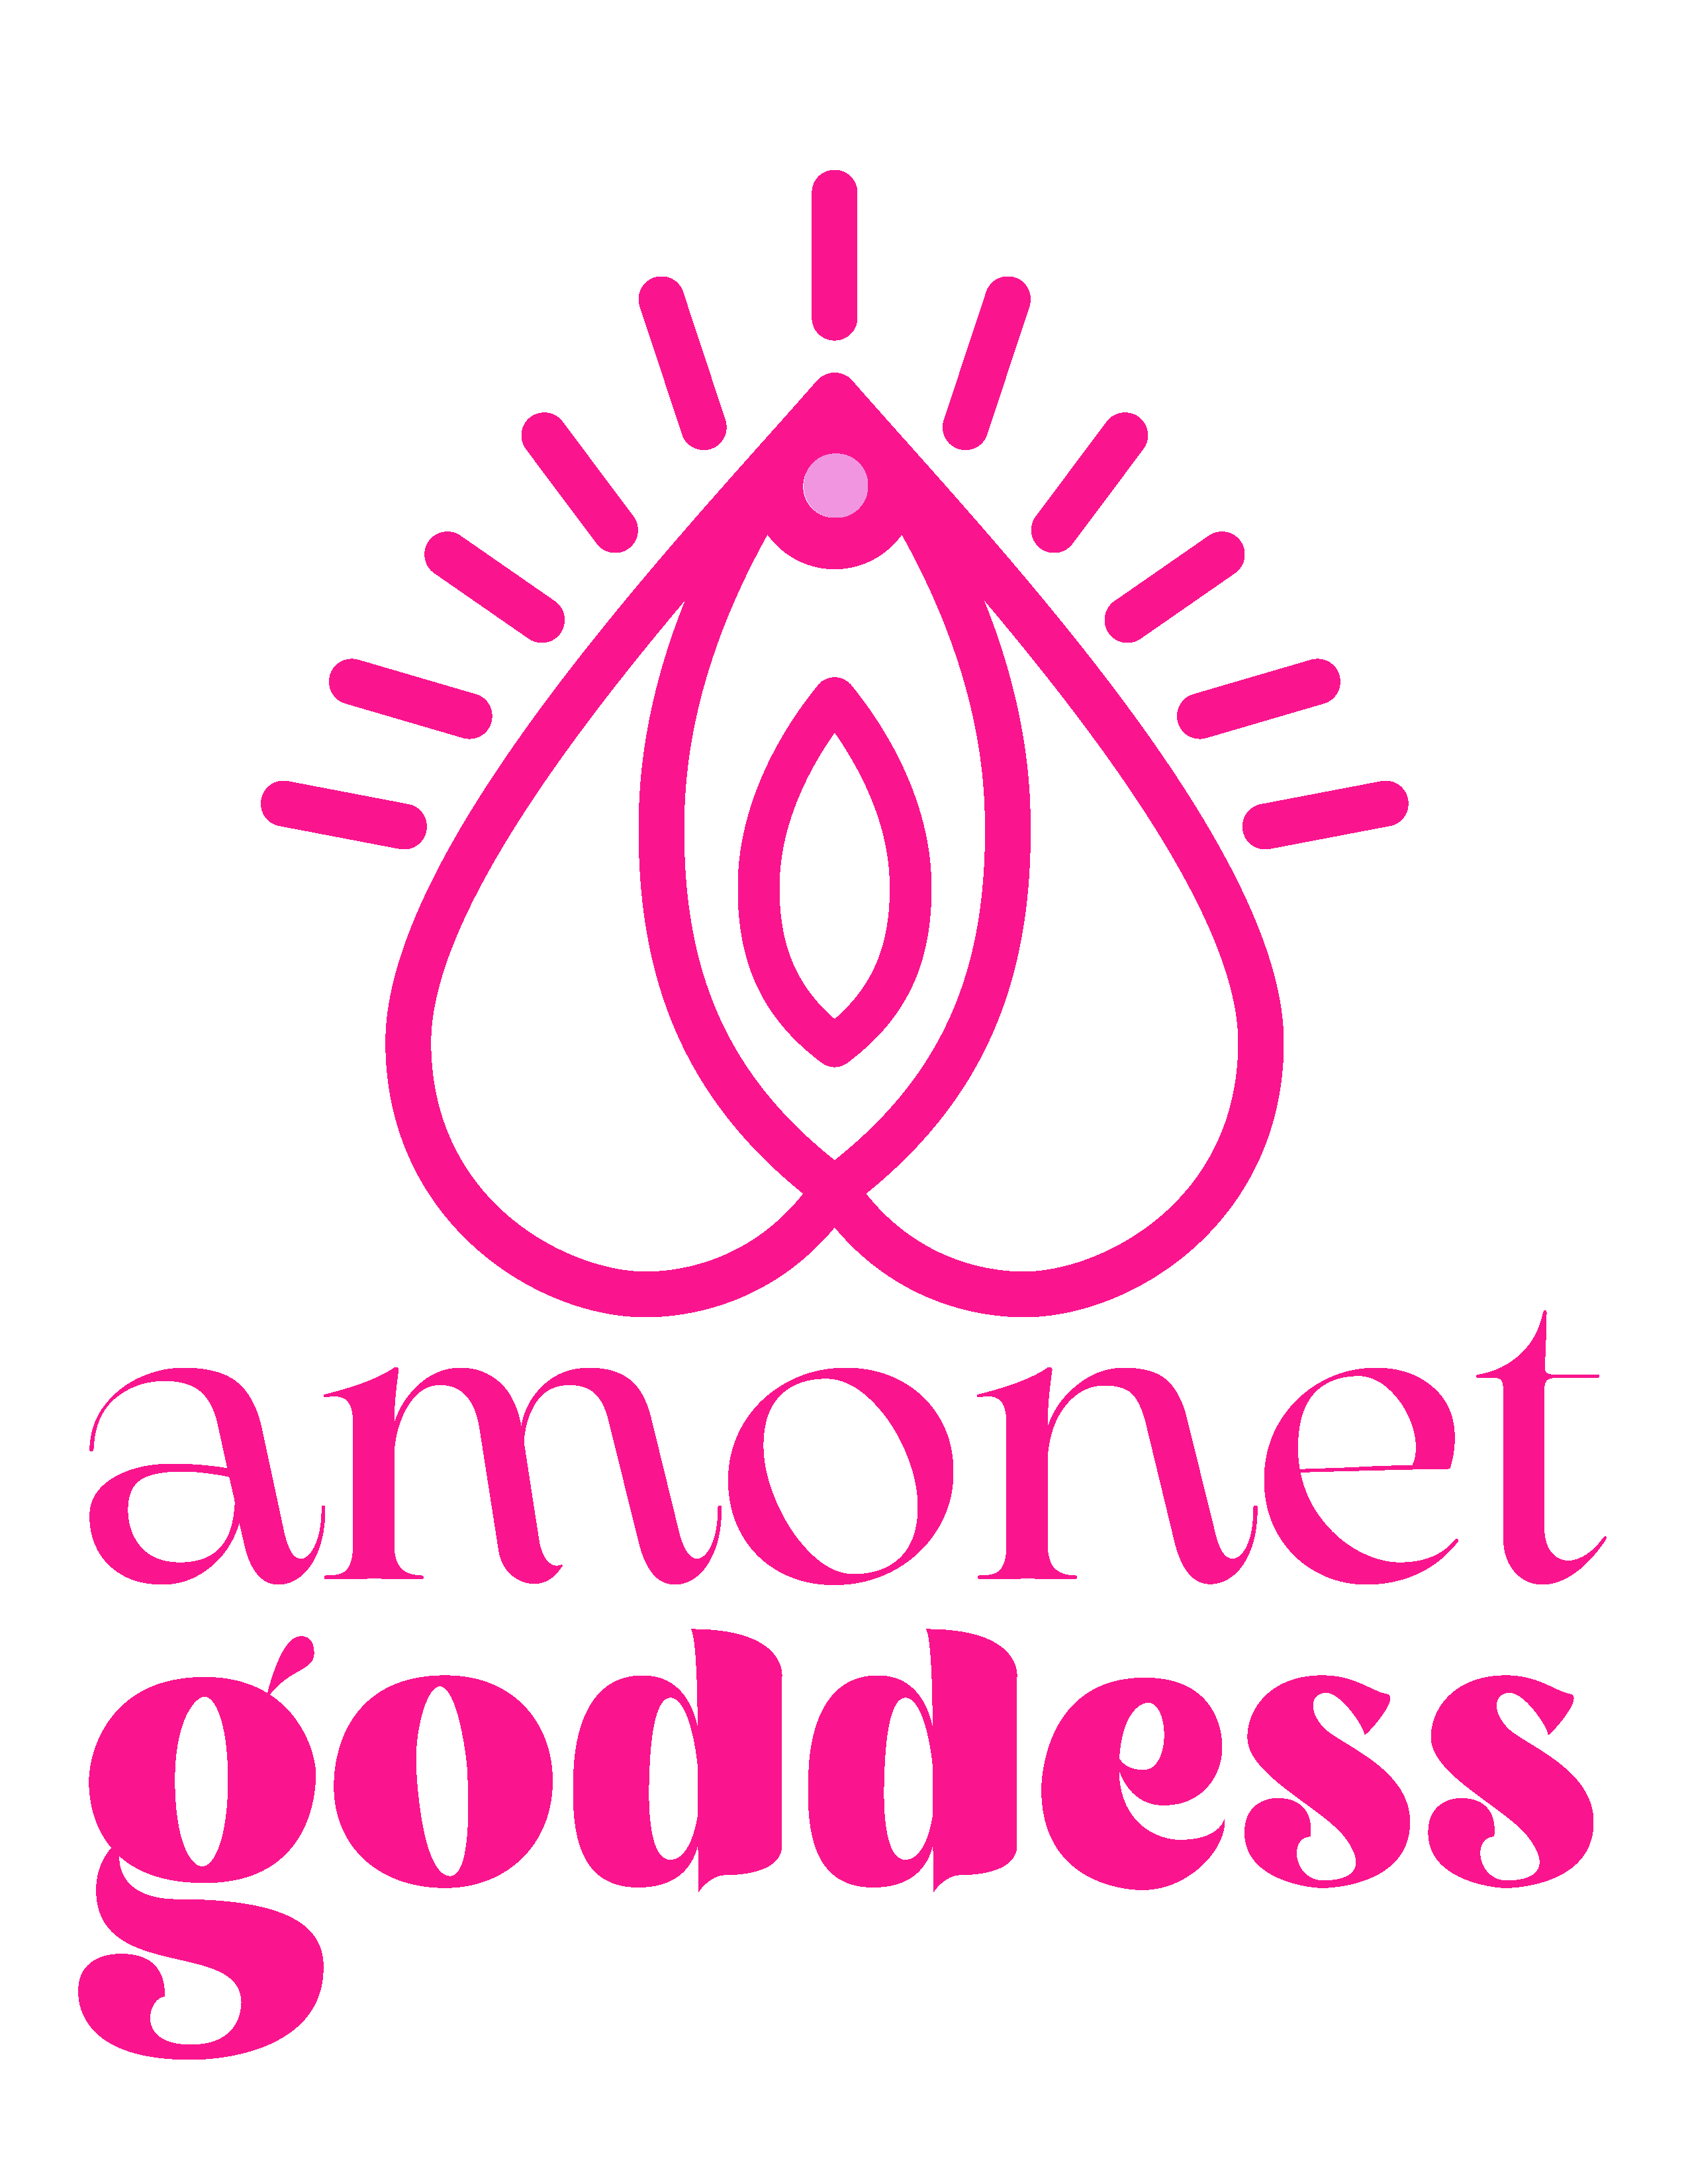 Amonet Goddess